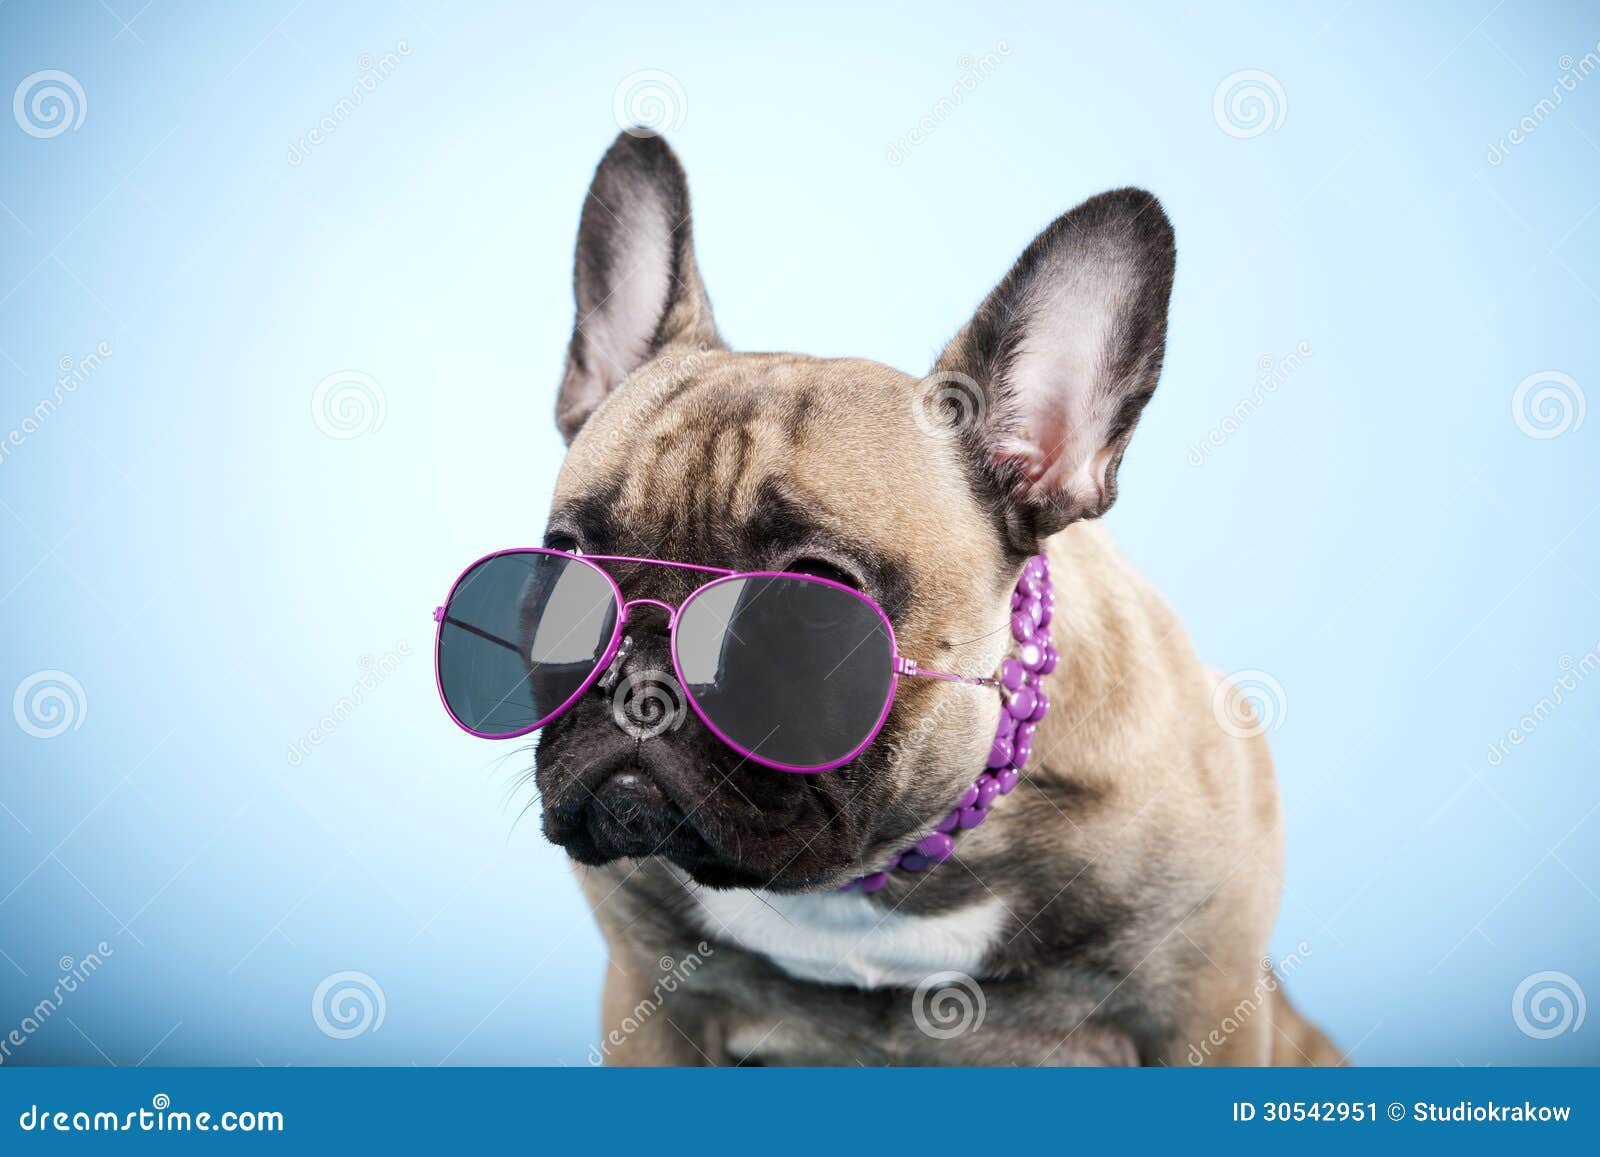 french-bulldog-sunglasses-portrait-wearing-shot-blue-backgorund-bright-halo-effect-30542951.jpg